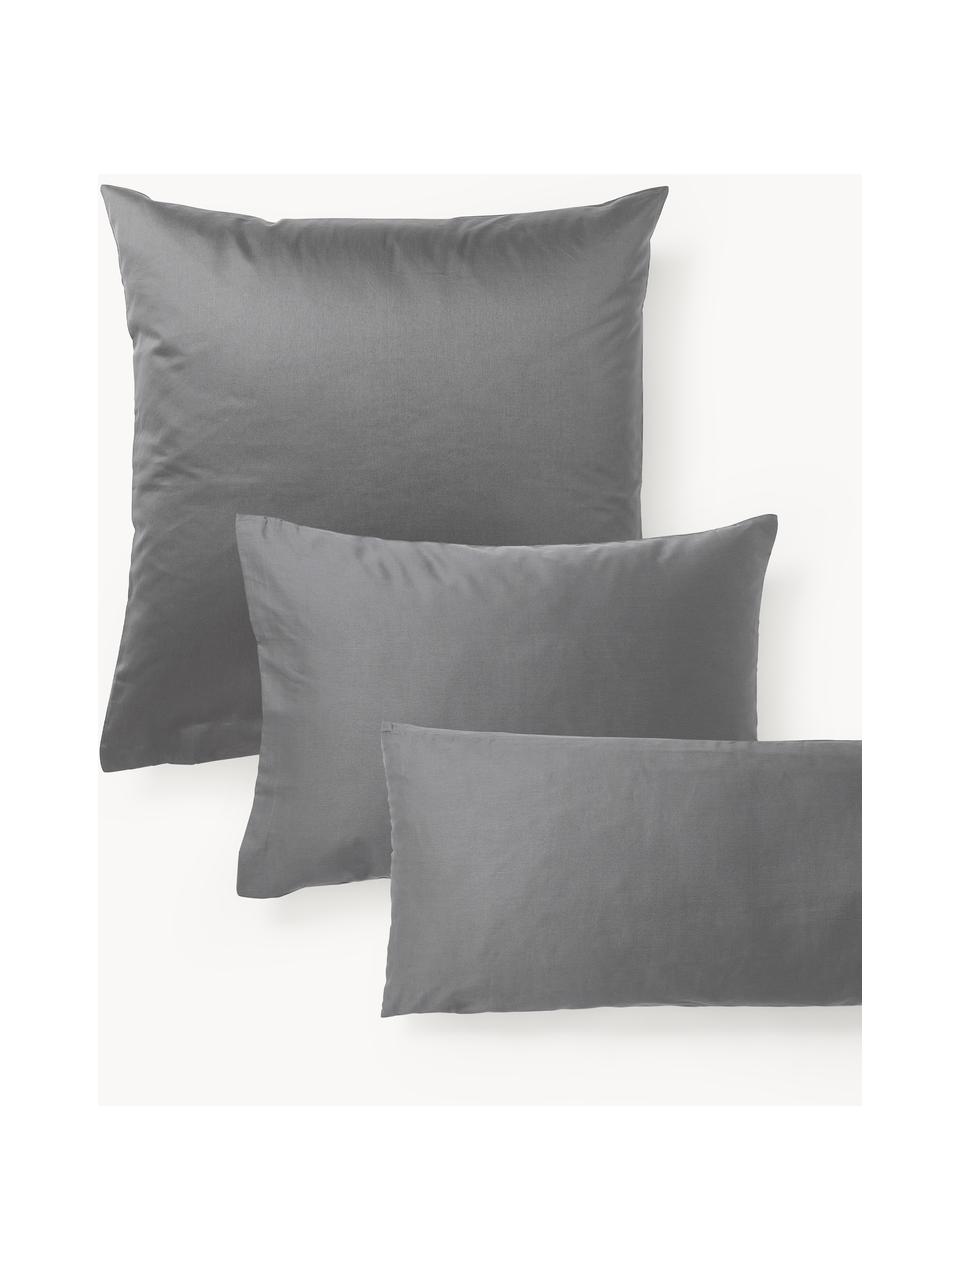 Funda de almohada de satén Comfort, Gris oscuro, An 45 x L 110 cm